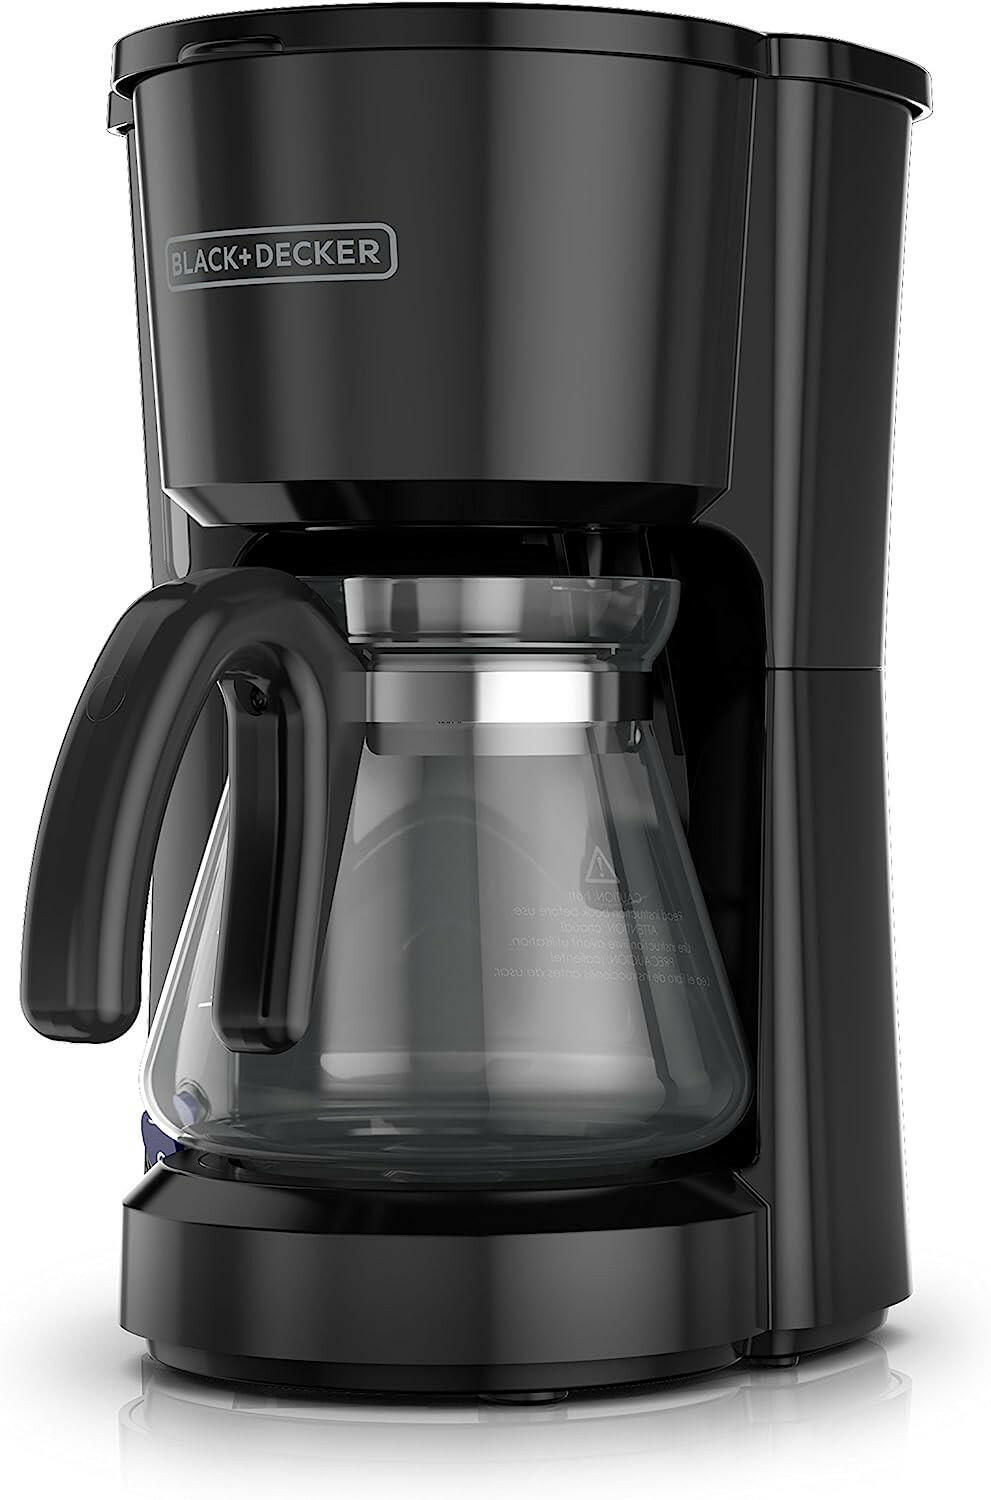  BLACK+DECKER 5-Cup Coffeemaker, Black, DCM600B: Drip  Coffeemakers: Home & Kitchen